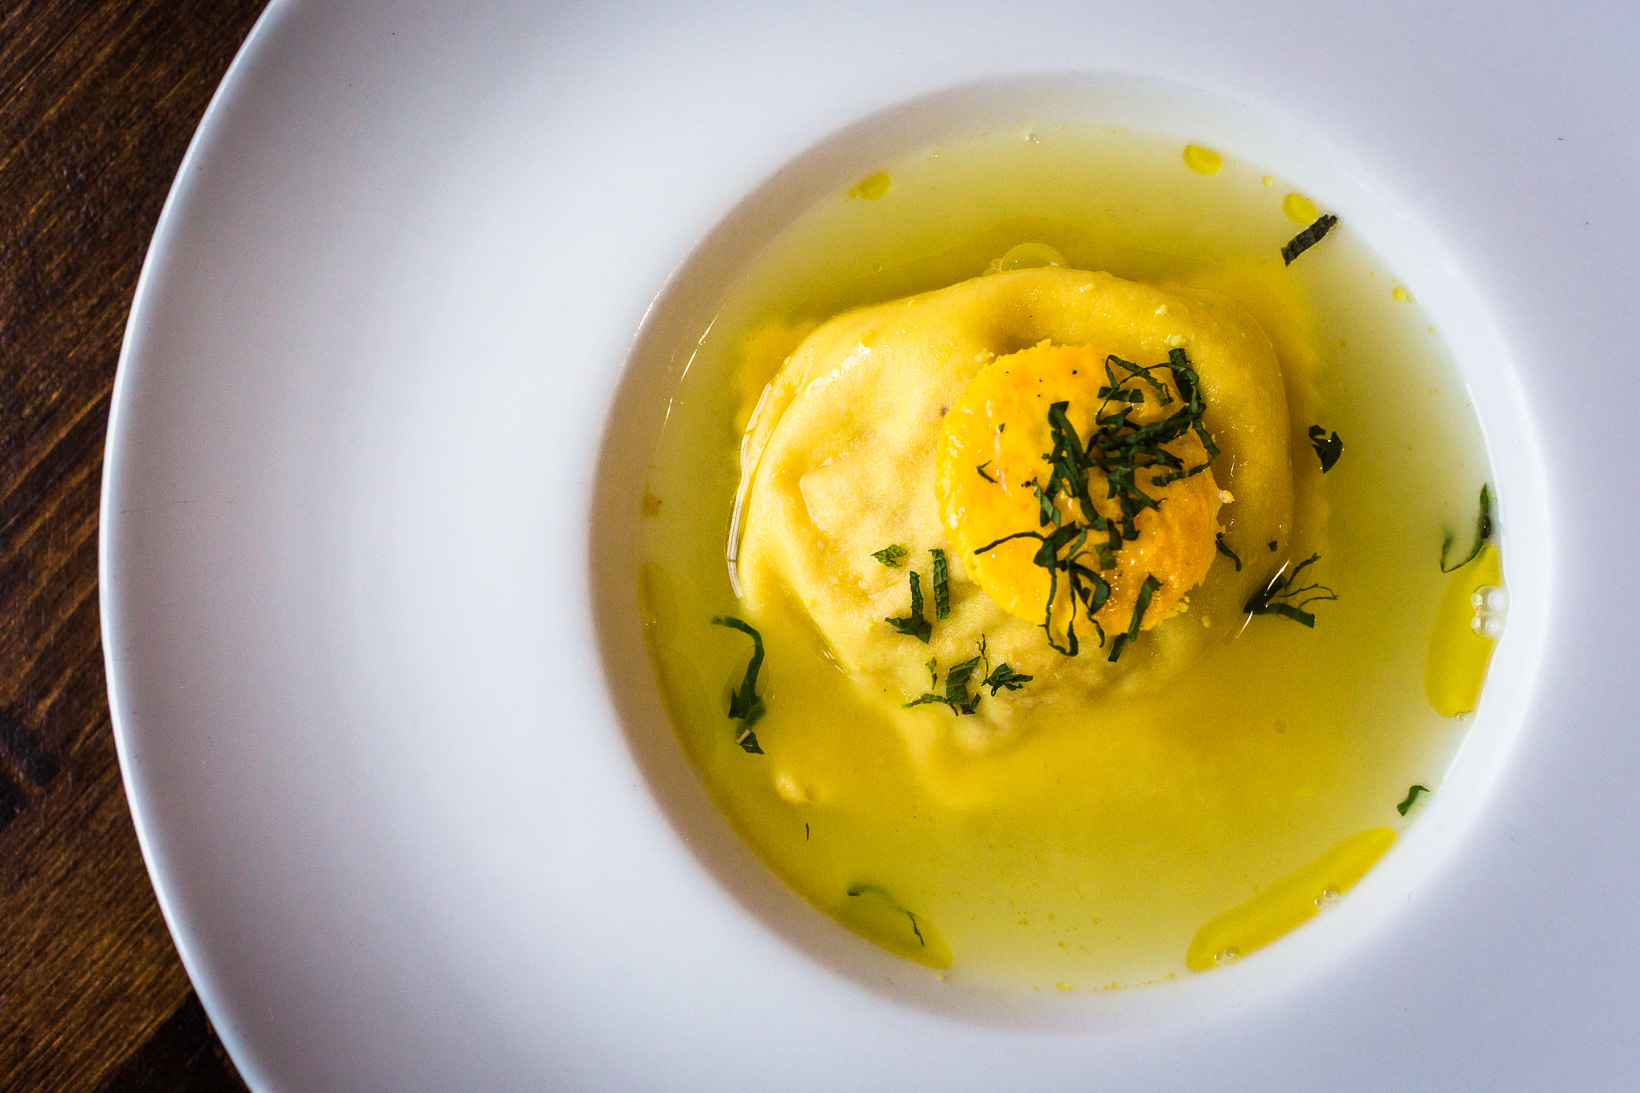  ravioli in broth, soup with ravioli, garnished with egg yolk, Trattoria Moma, modern Italian cuisine, philadelphia 